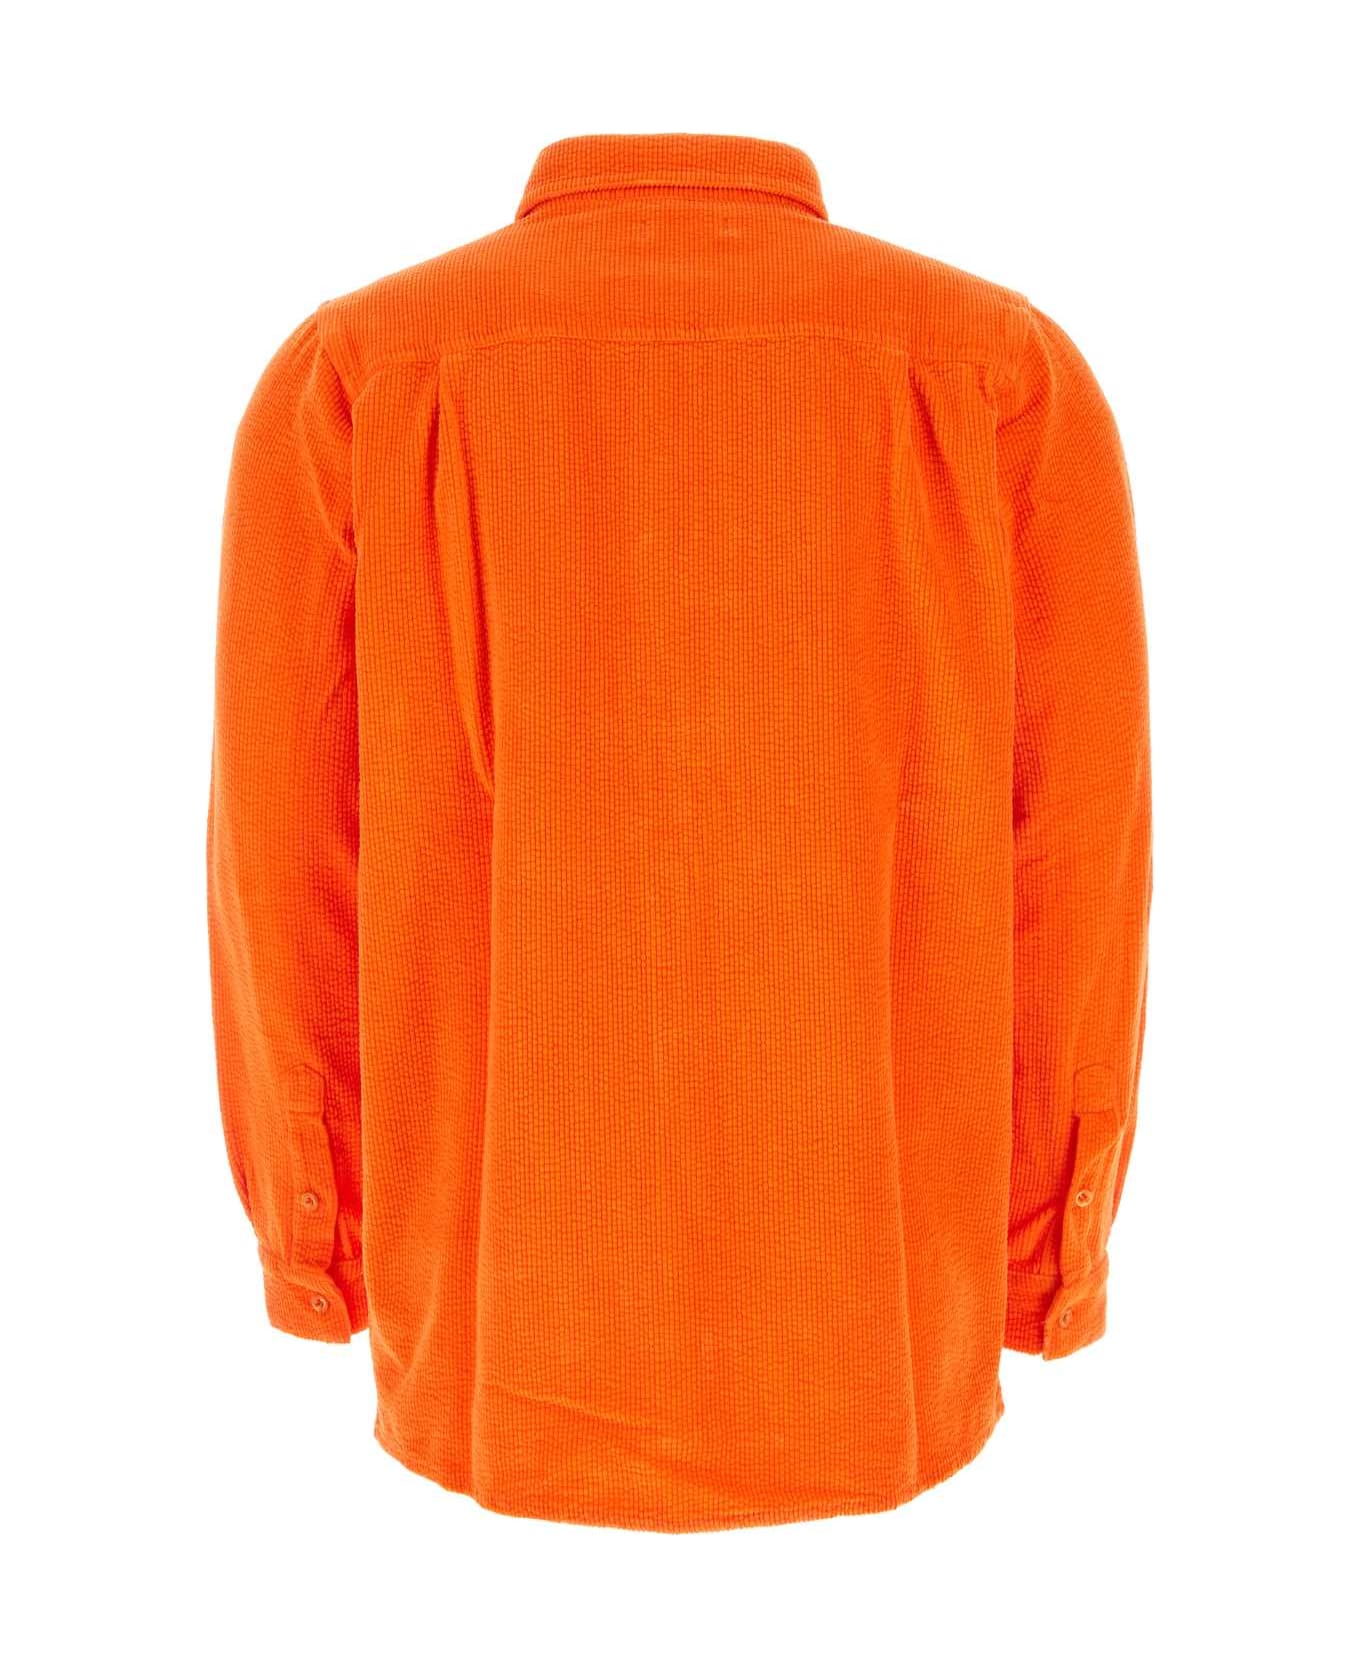 ERL Orange Corduroy Shirt - ORANGE